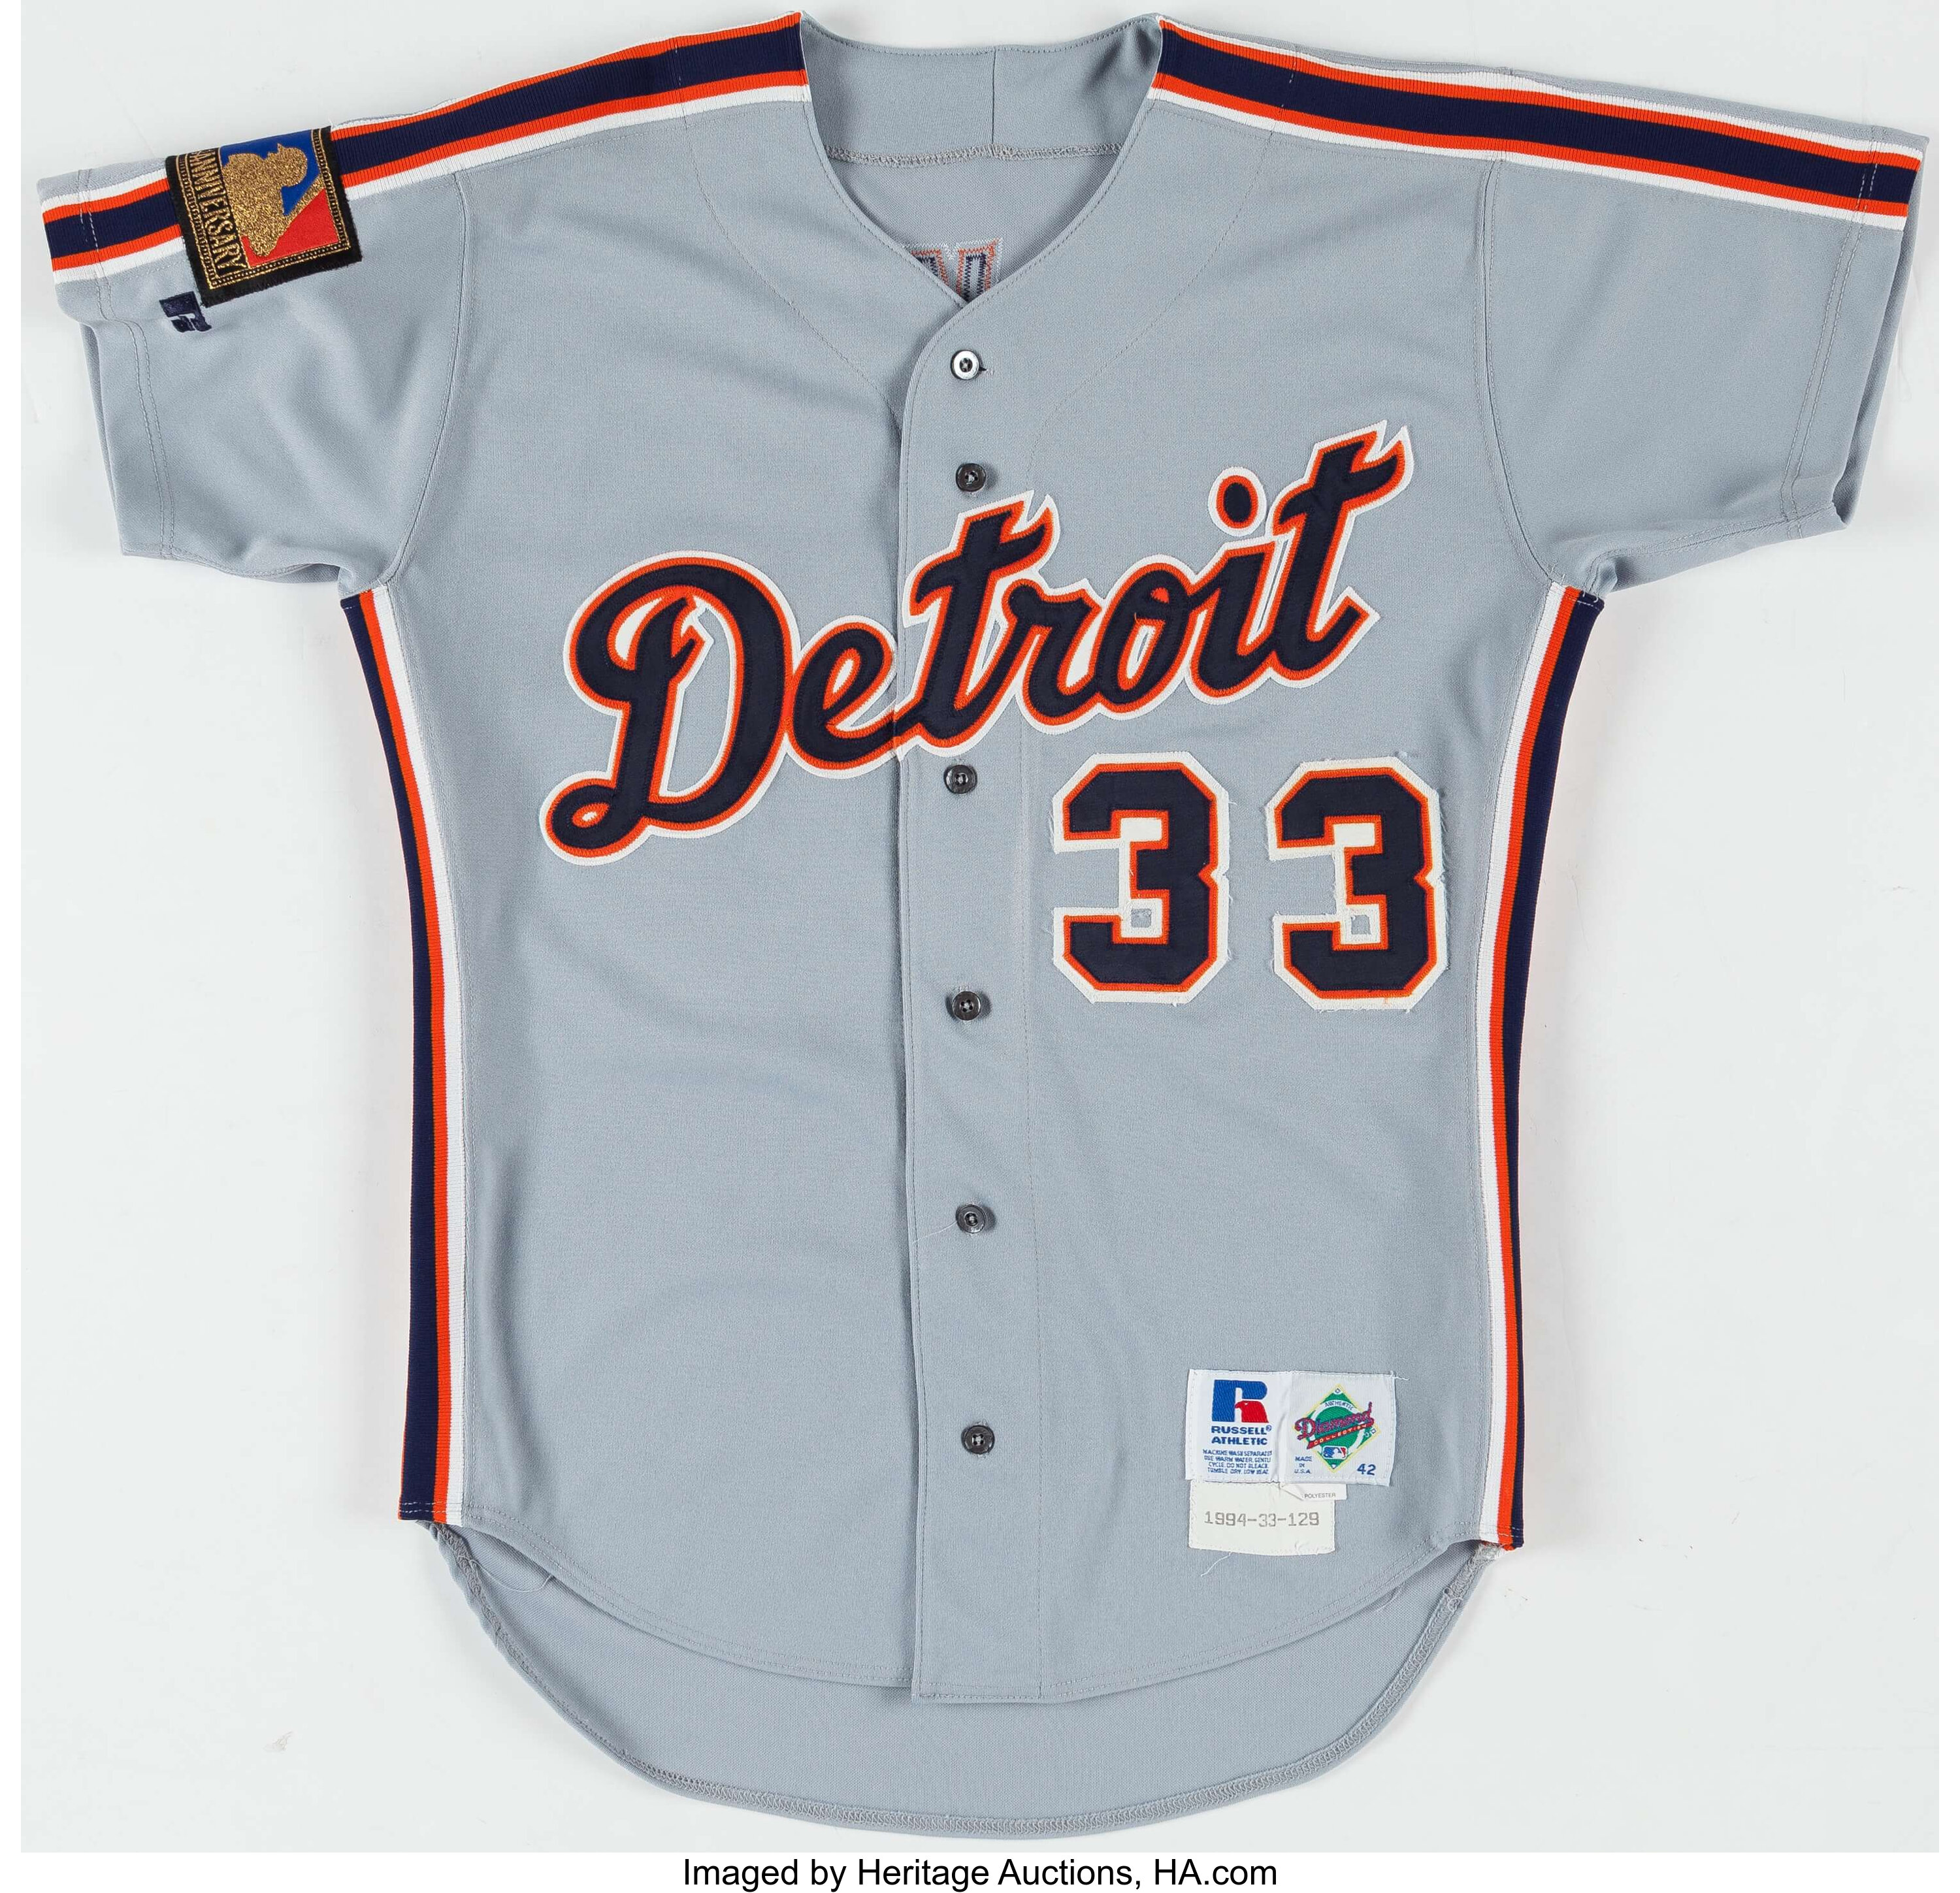 1994 Eric Davis Detroit Tigers Game Worn Jersey.  Baseball, Lot #41307